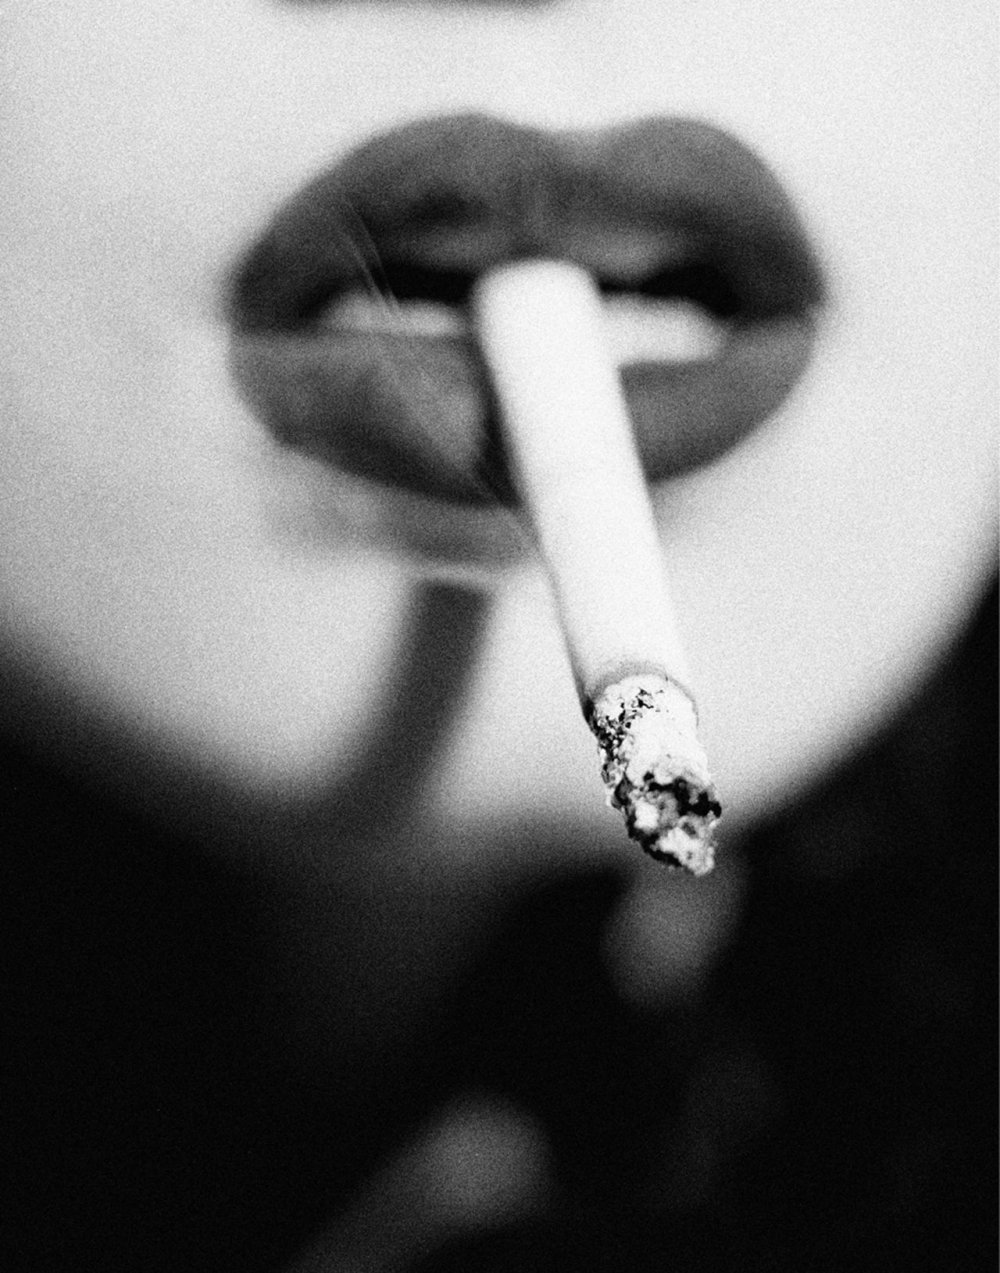 Сигарета в губах девушки